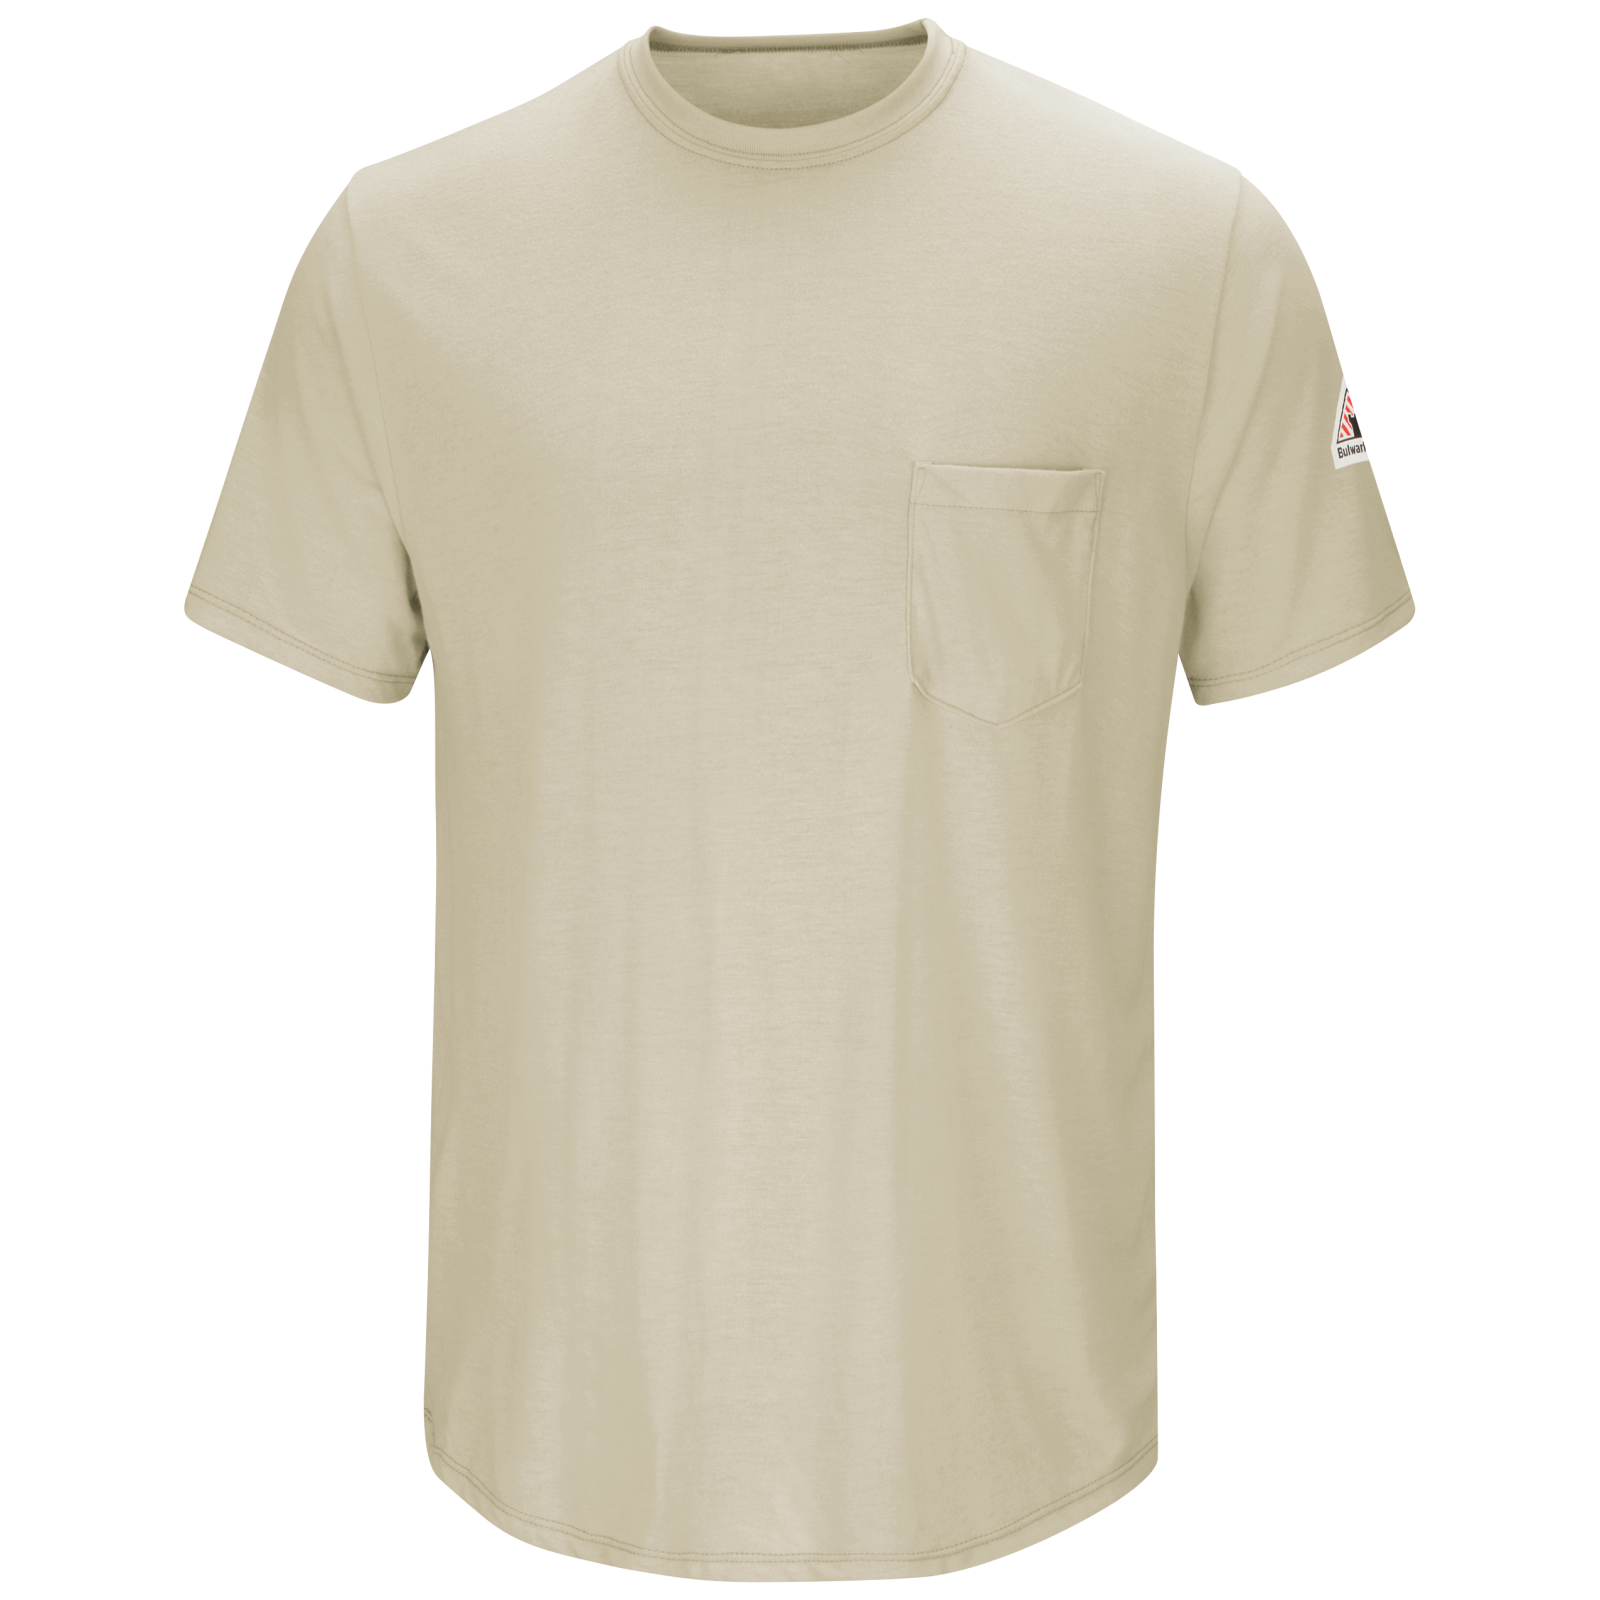 Titicaca FR Shirts Flame Resistant T Shirts 100% Cotton Men's Pre-Washed Fire Retardant T-Shirts 